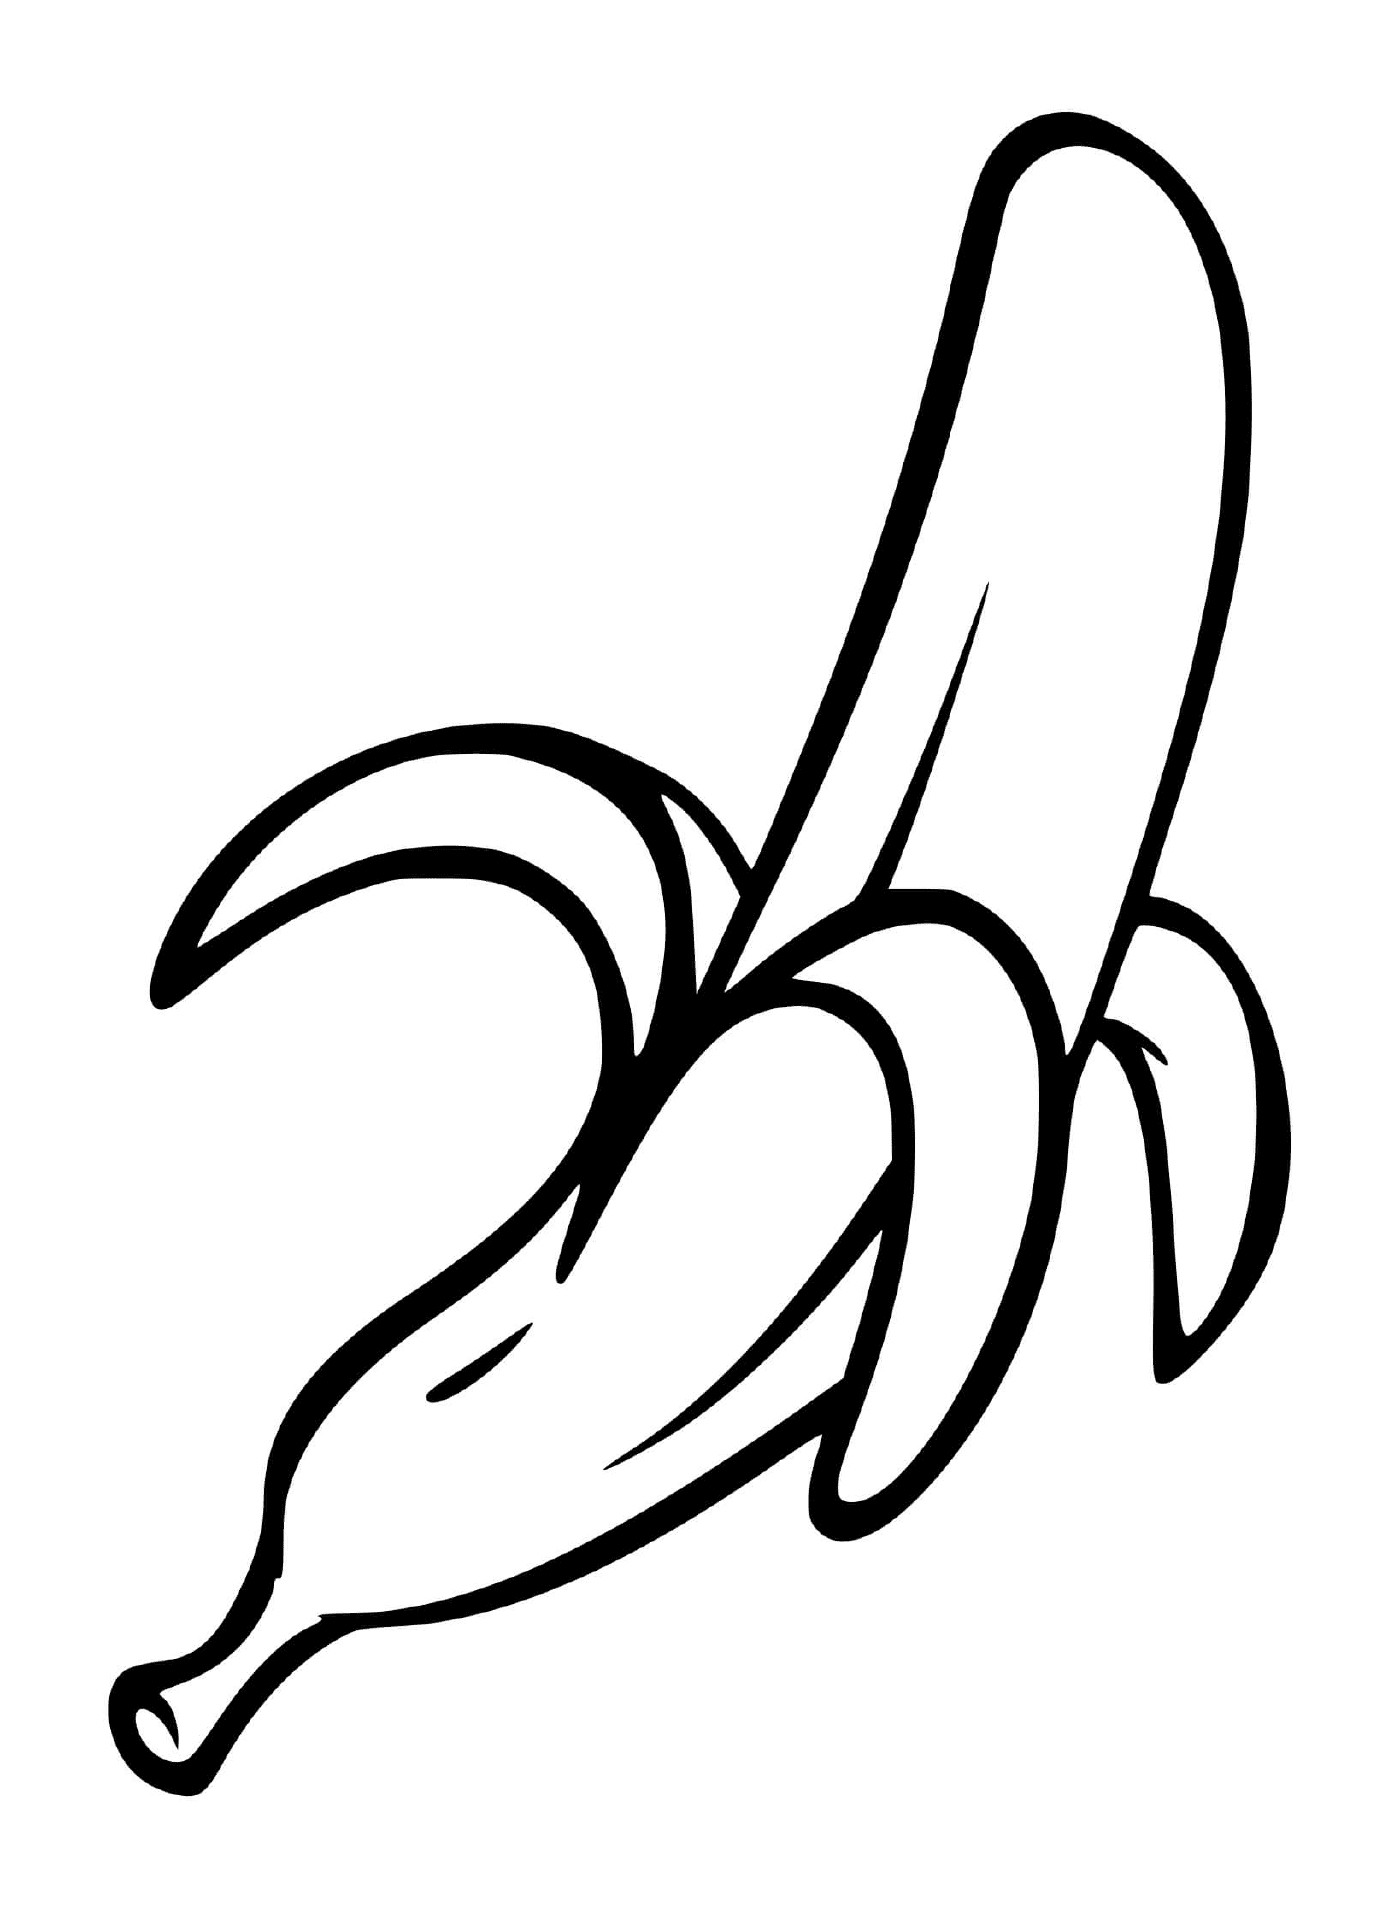  Очищенный банан 